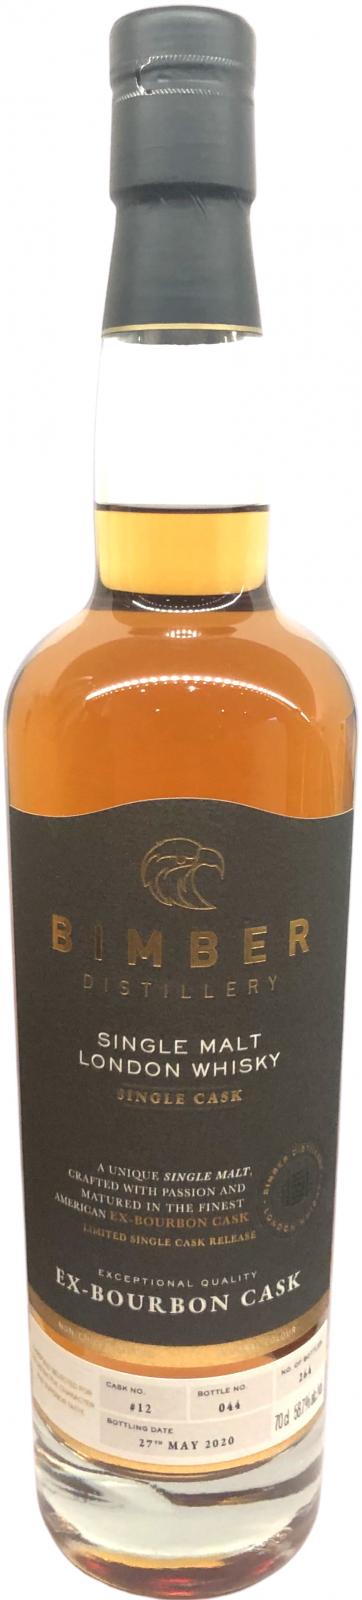 Bimber Single Malt London Whisky